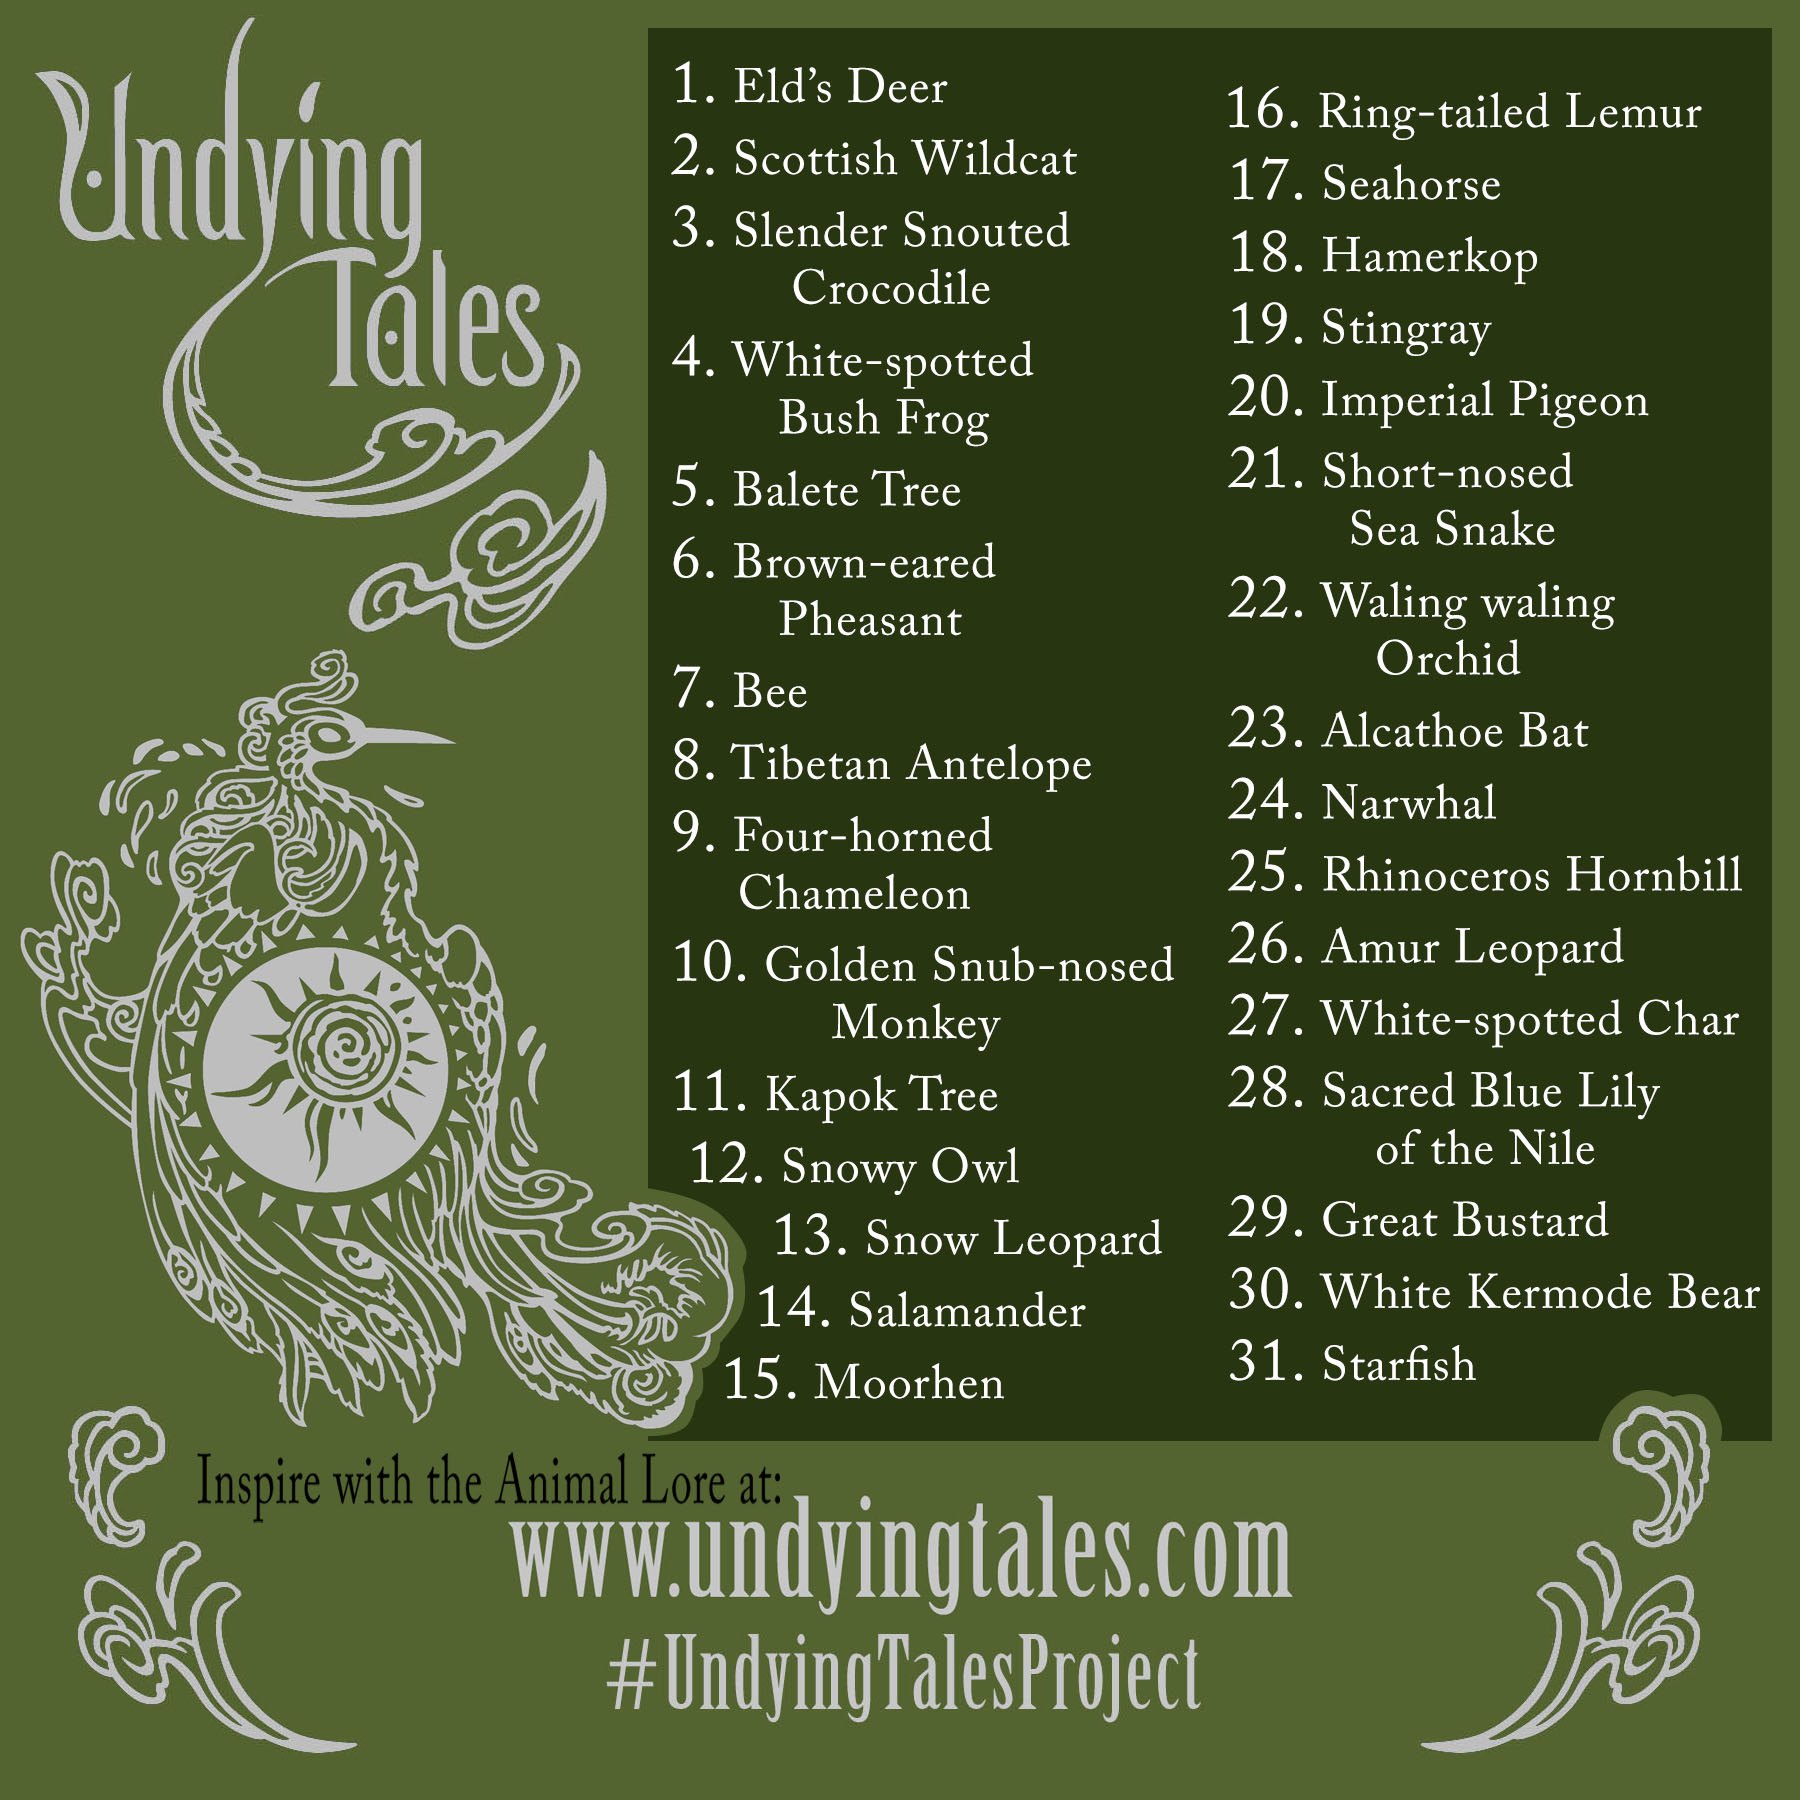 Undying Tales: Endangered Creatures & Mythology